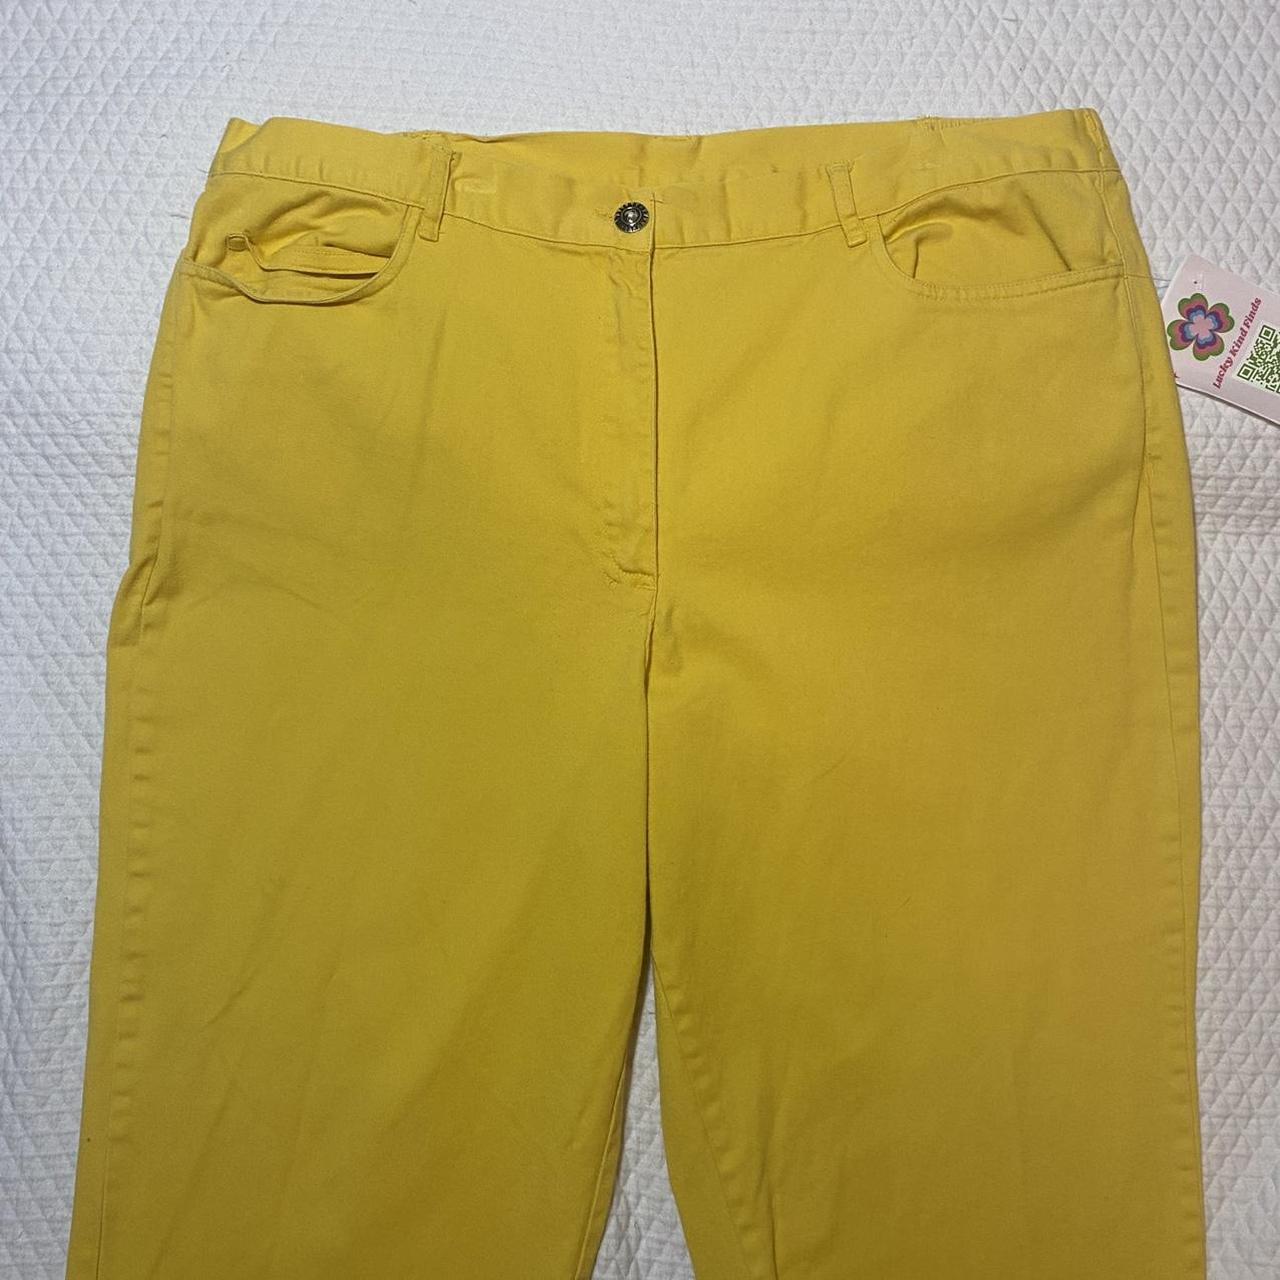 Bright Yellow Pants